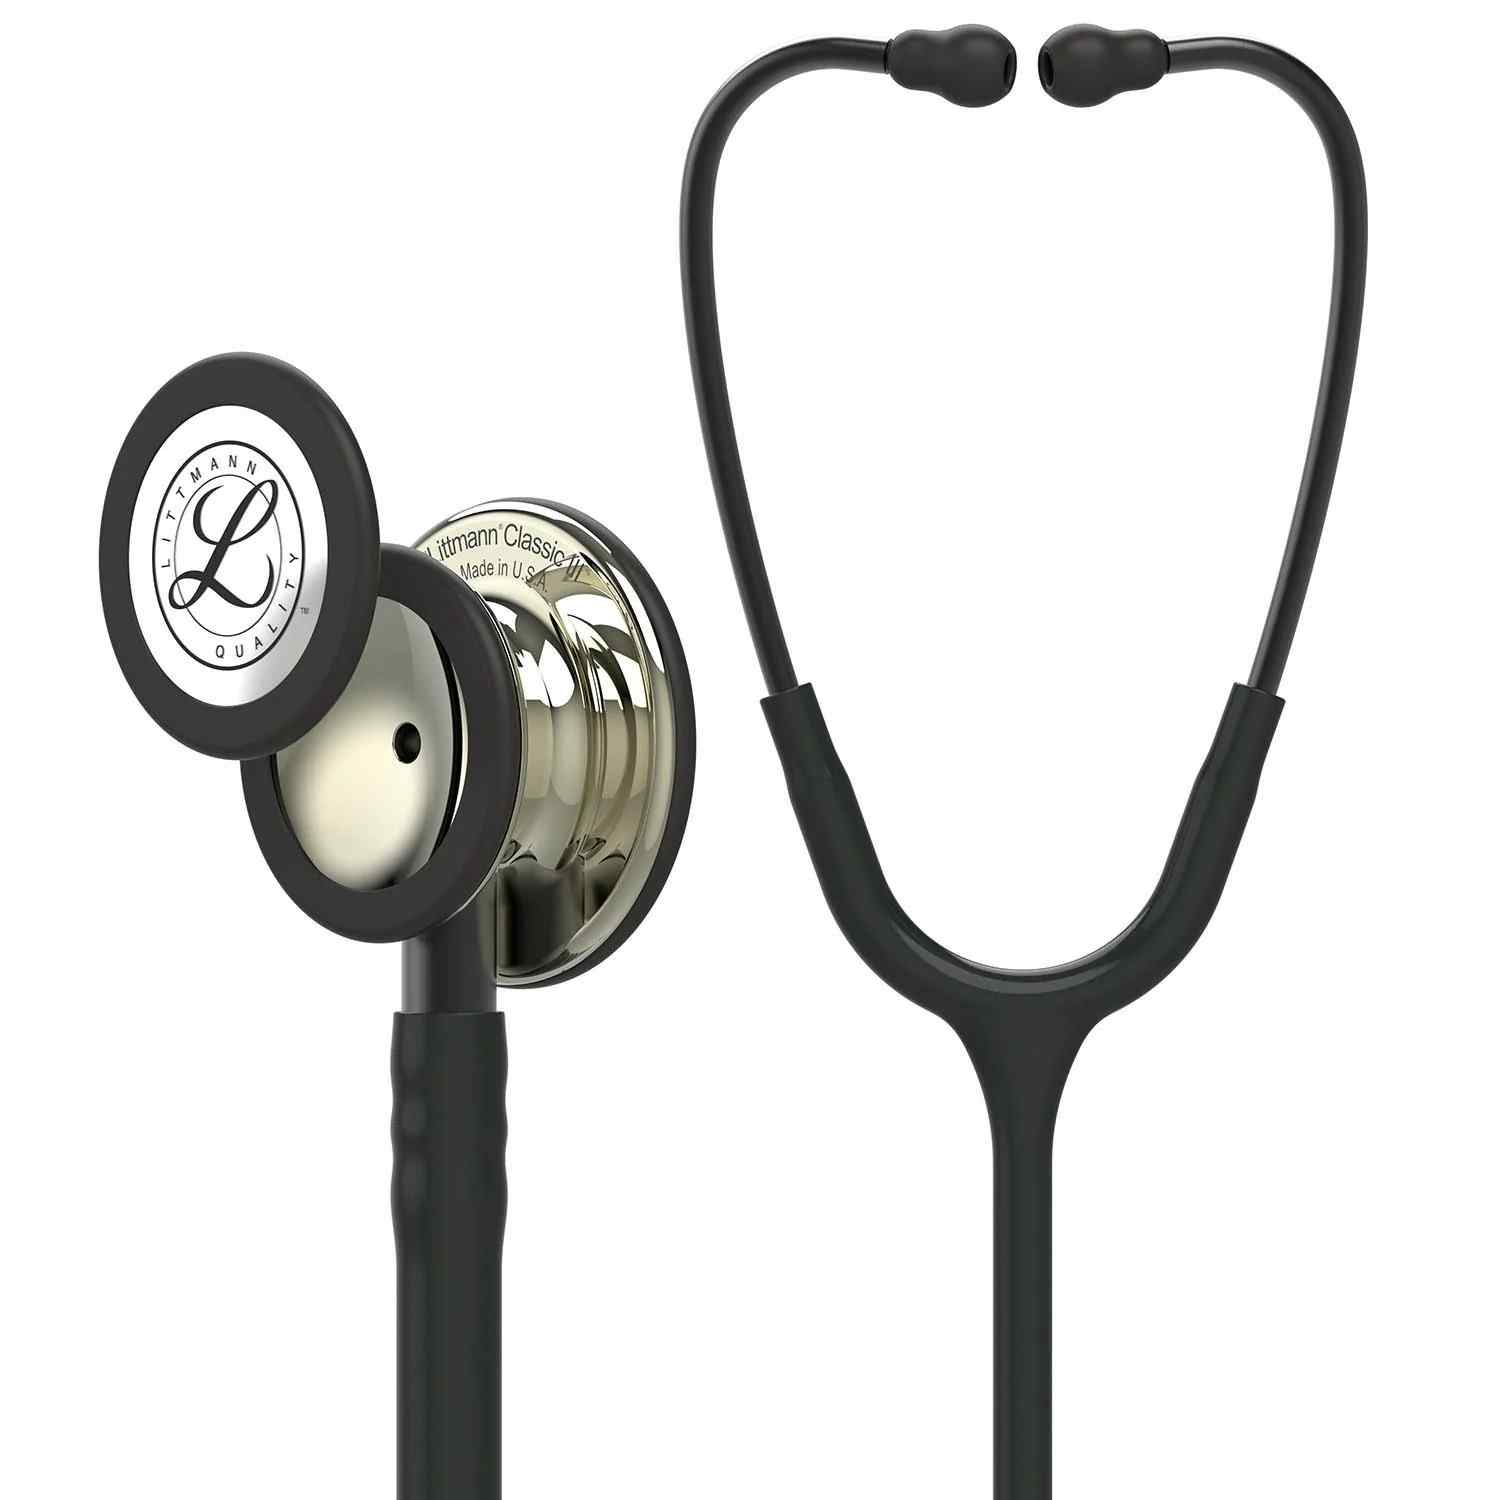 3M 5803 Littmann Classic III Black Edition Chestpiece Monitoring Stethoscope, 27